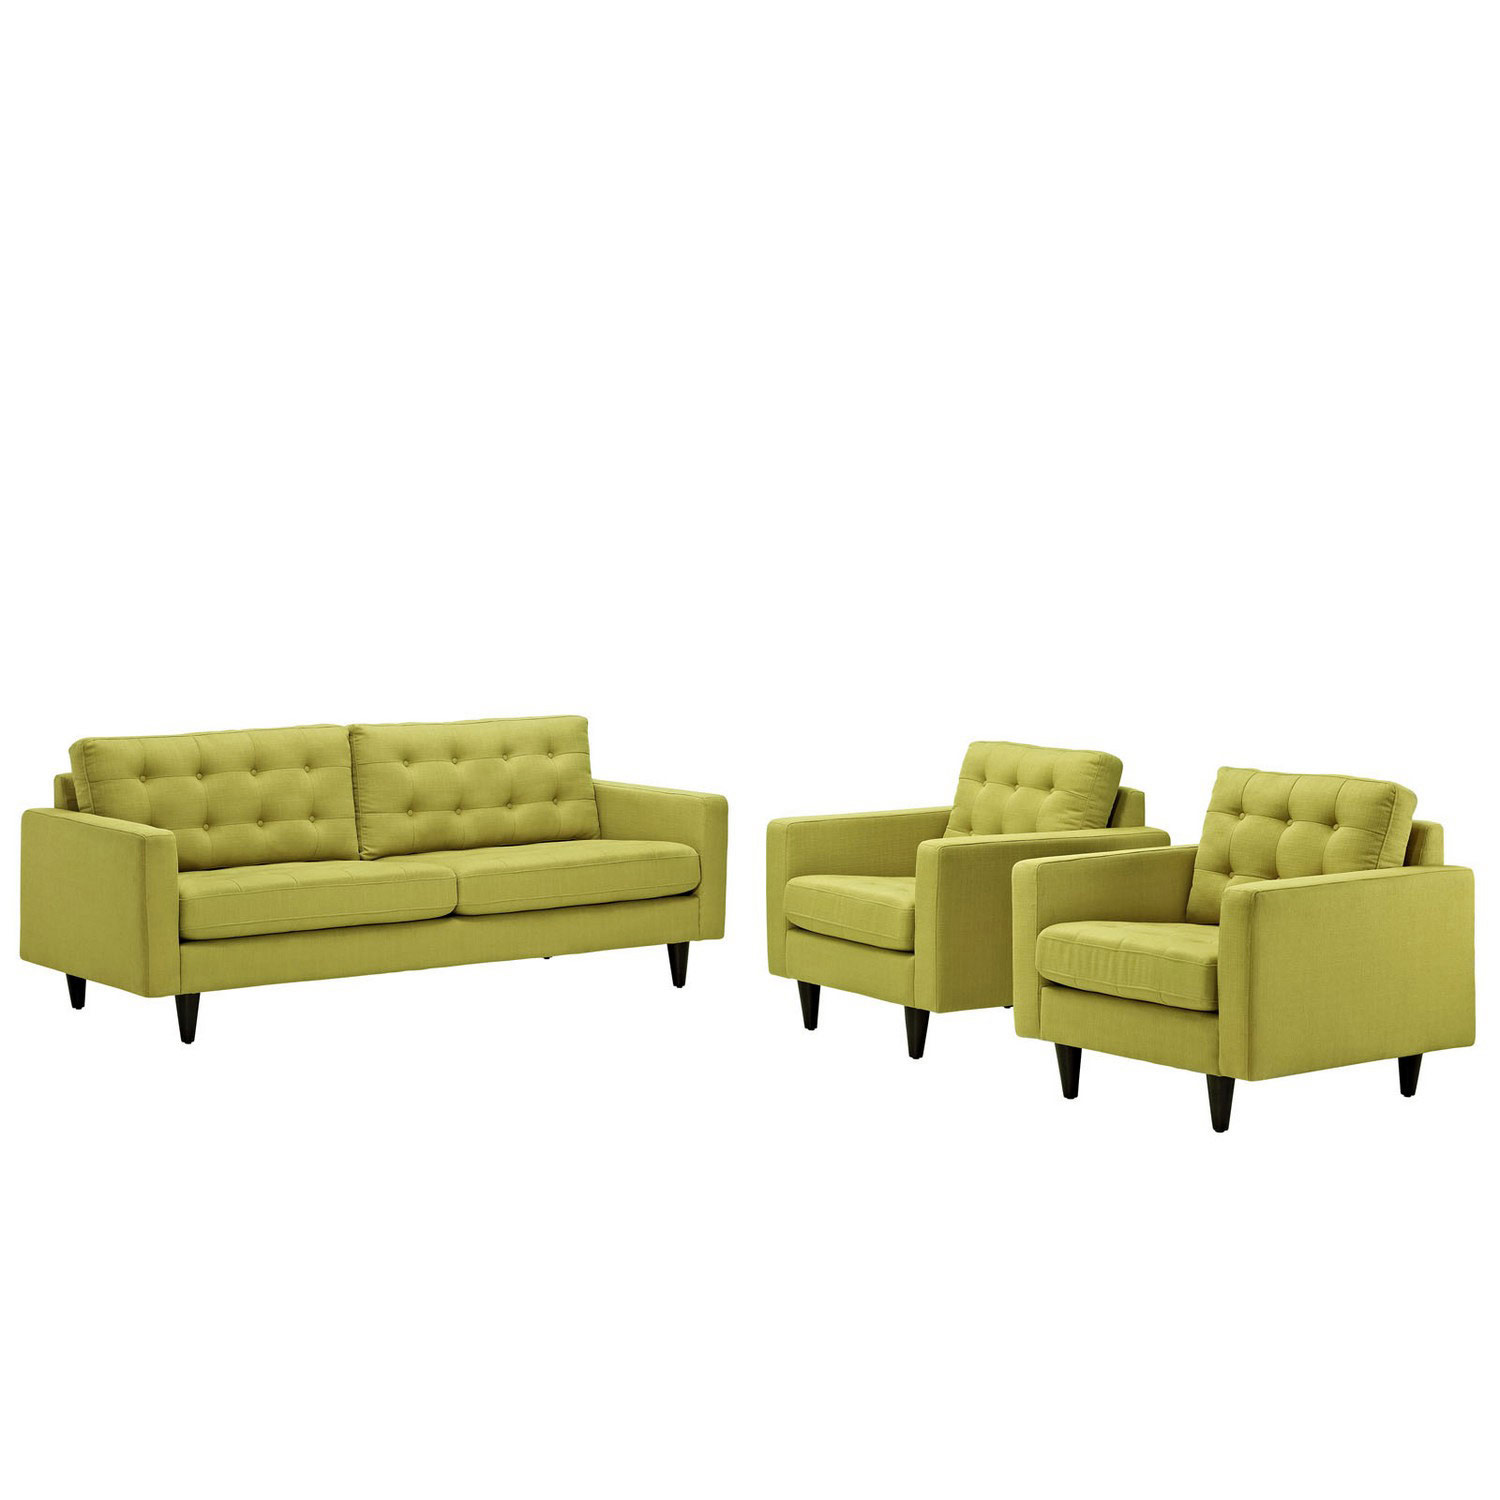 Modway Empress 3PC Sofa and Armchairs Set - Wheatgrass